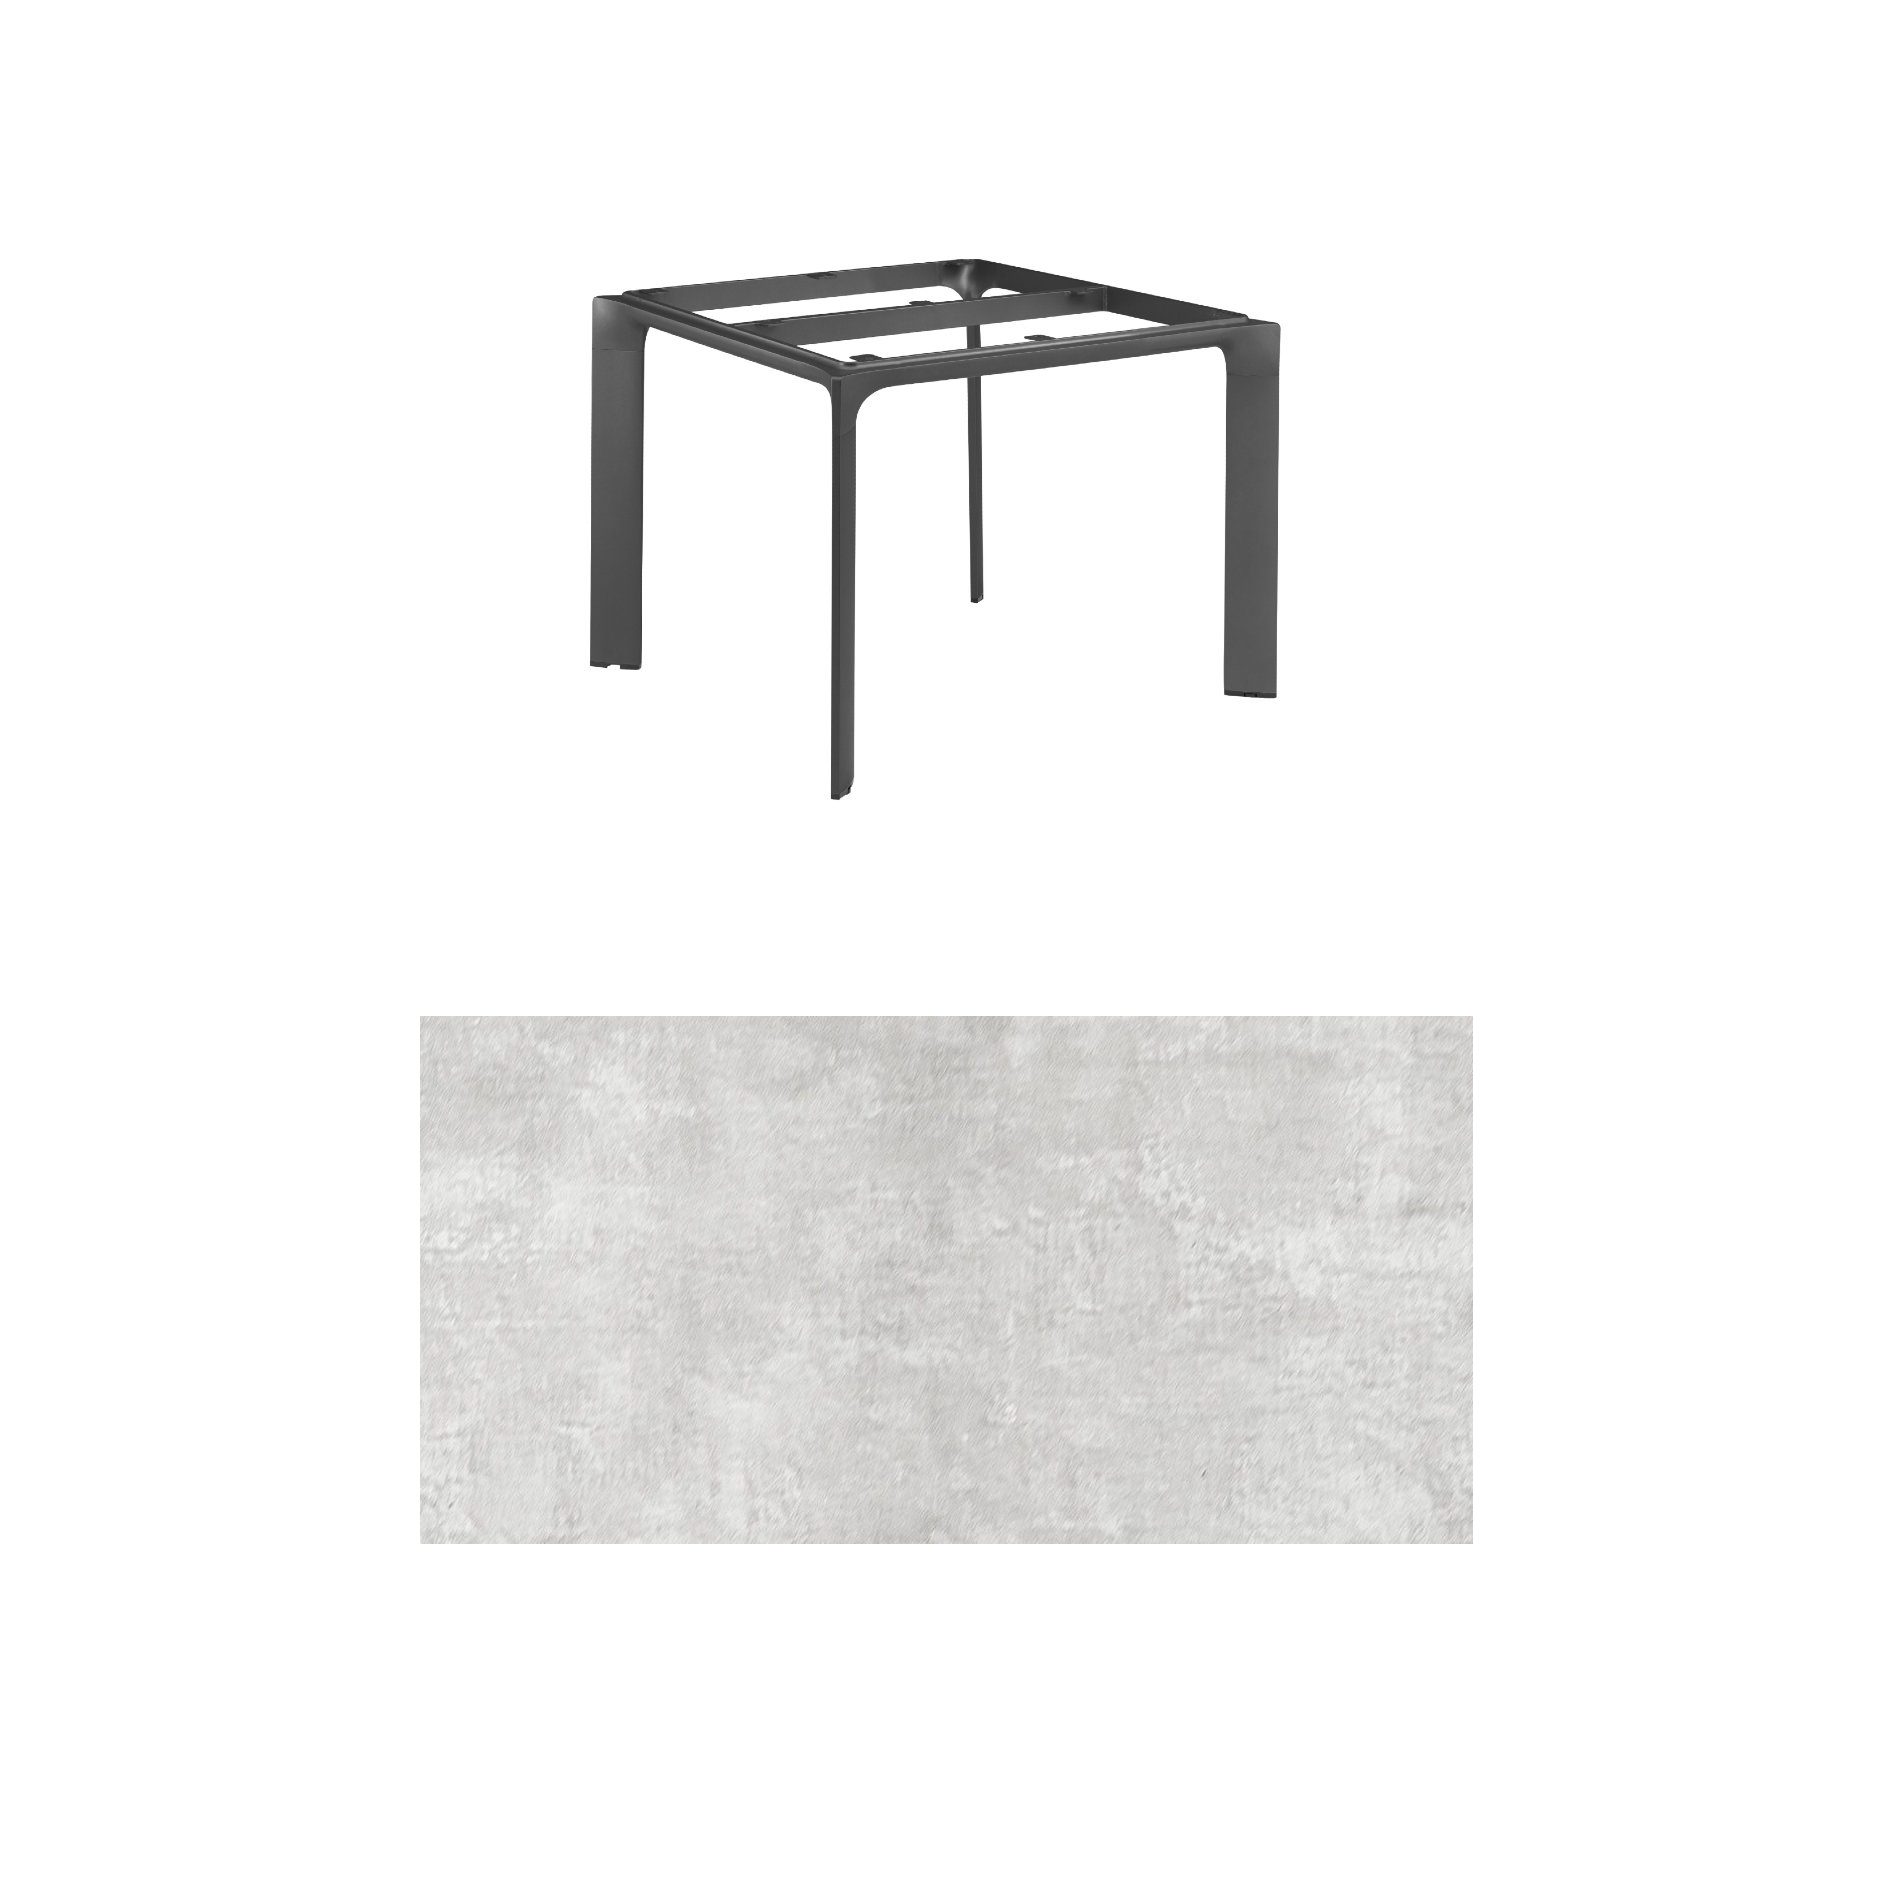 Kettler "Diamond" Tischsystem Gartentisch, Gestell Aluminium anthrazit, Tischplatte HPL hellgrau meliert, 95x95 cm